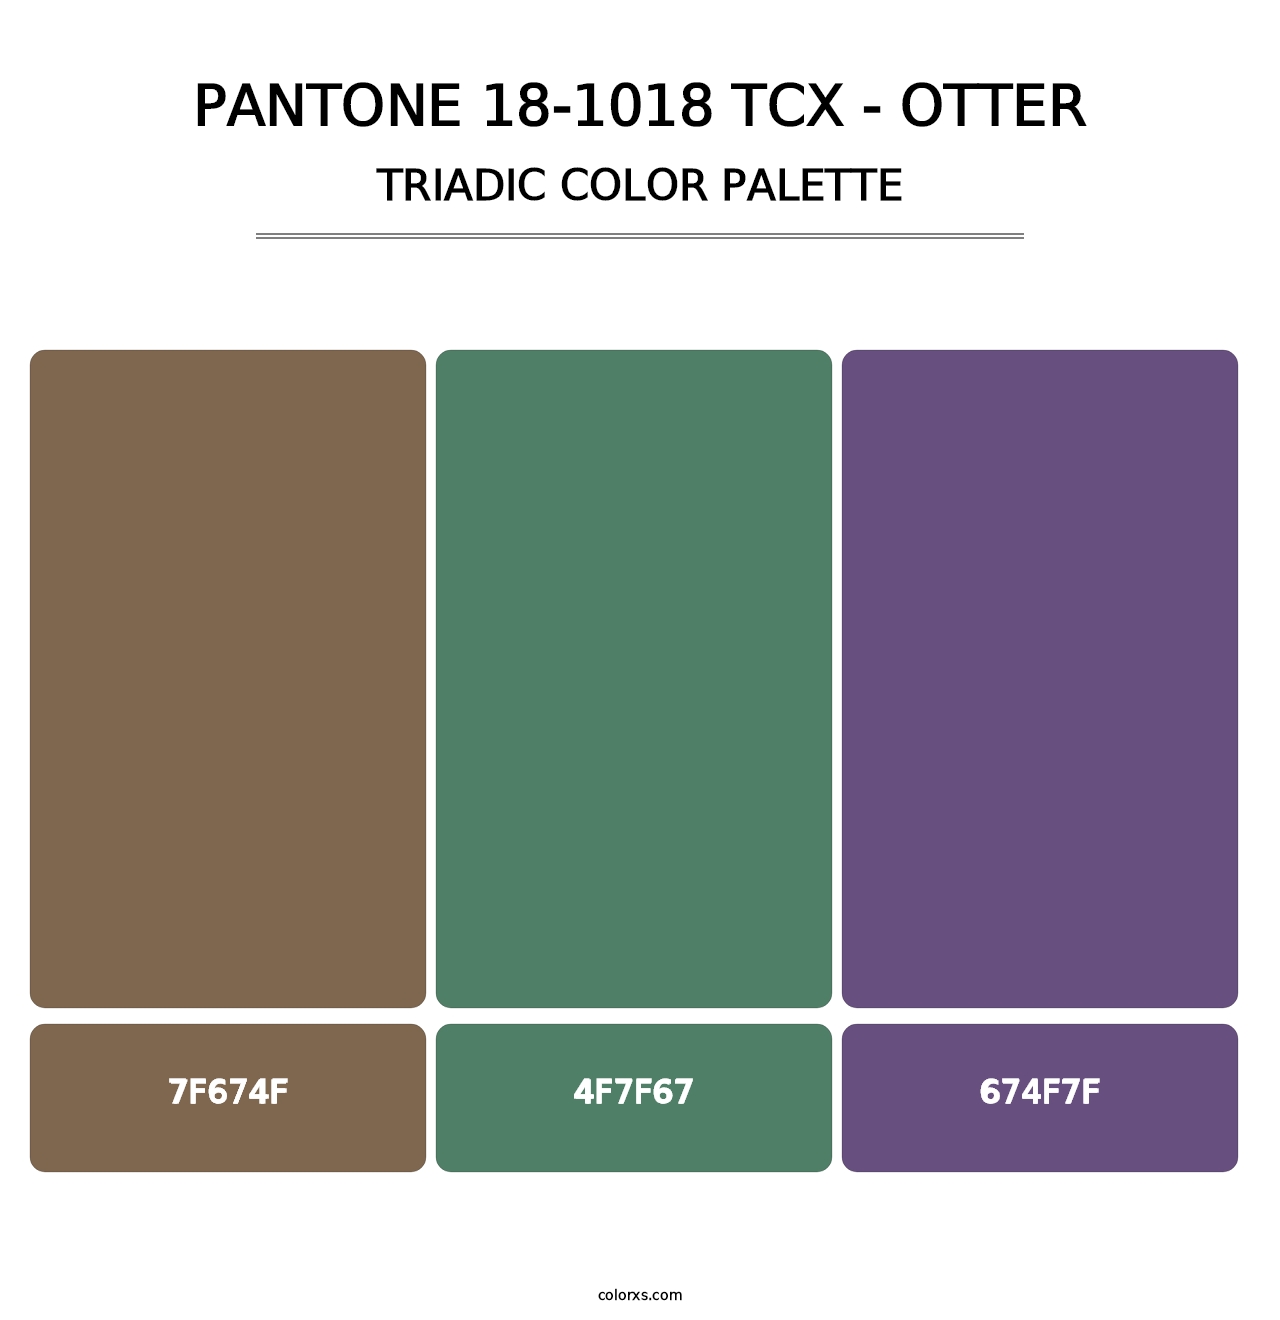 PANTONE 18-1018 TCX - Otter - Triadic Color Palette